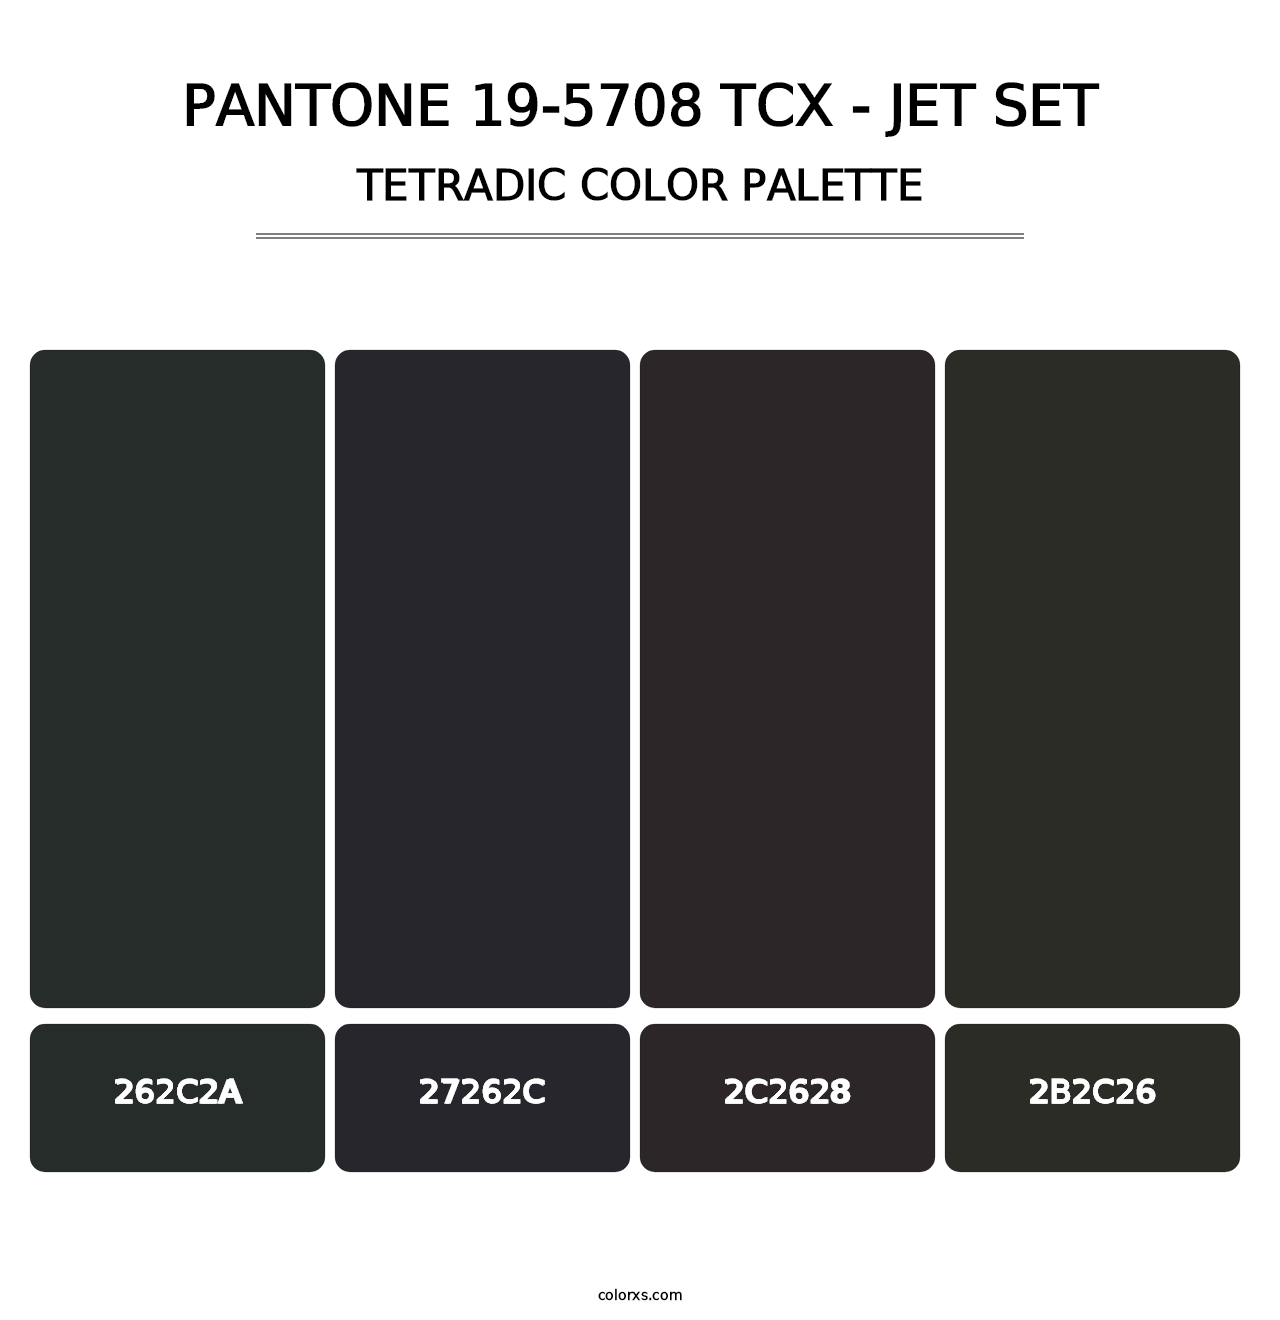 PANTONE 19-5708 TCX - Jet Set - Tetradic Color Palette